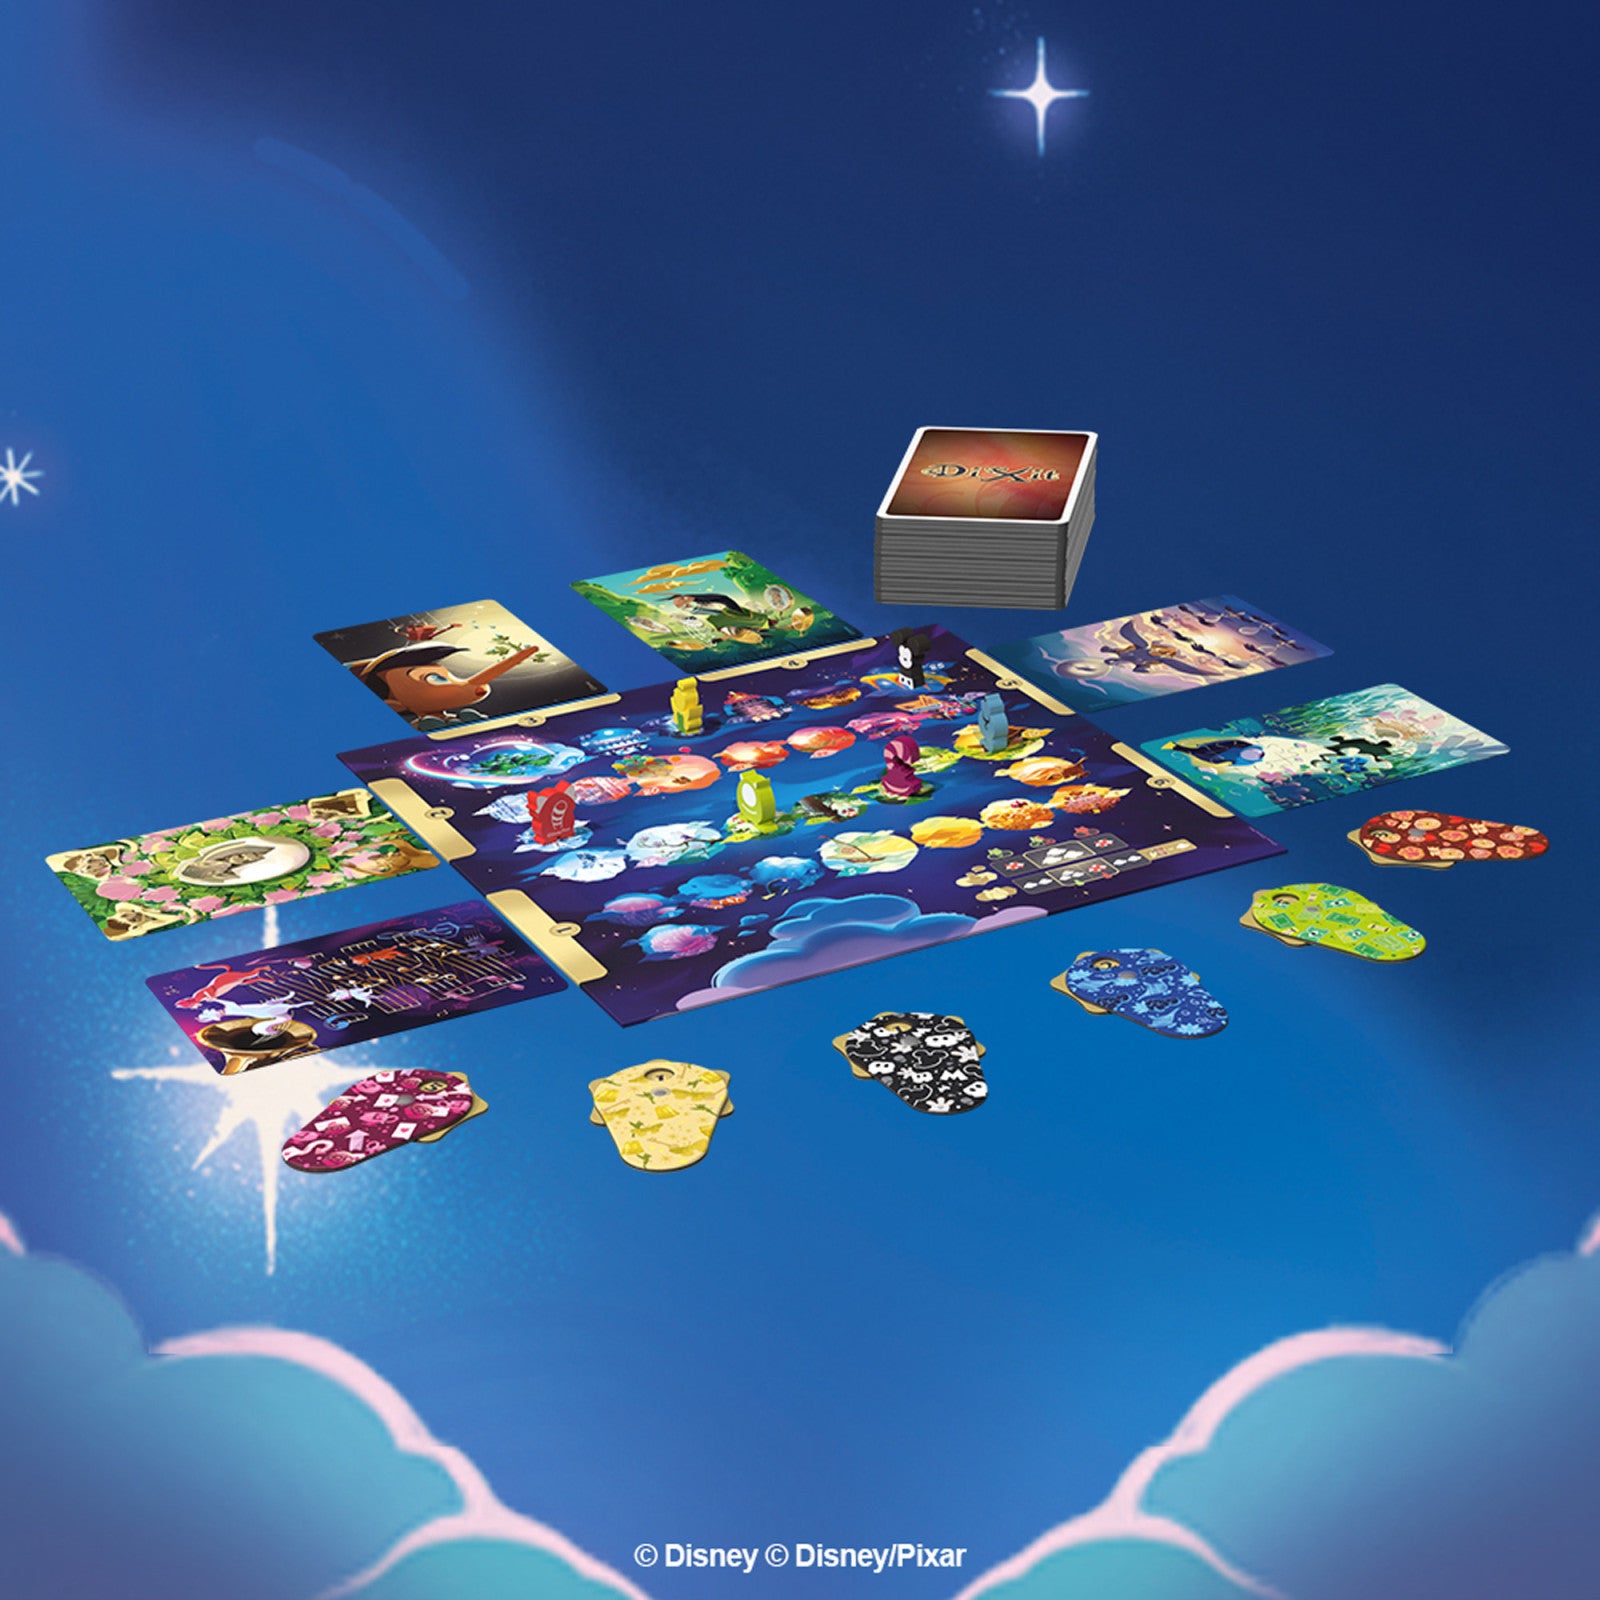 Dixit - Disney Edition - Toybox Tales